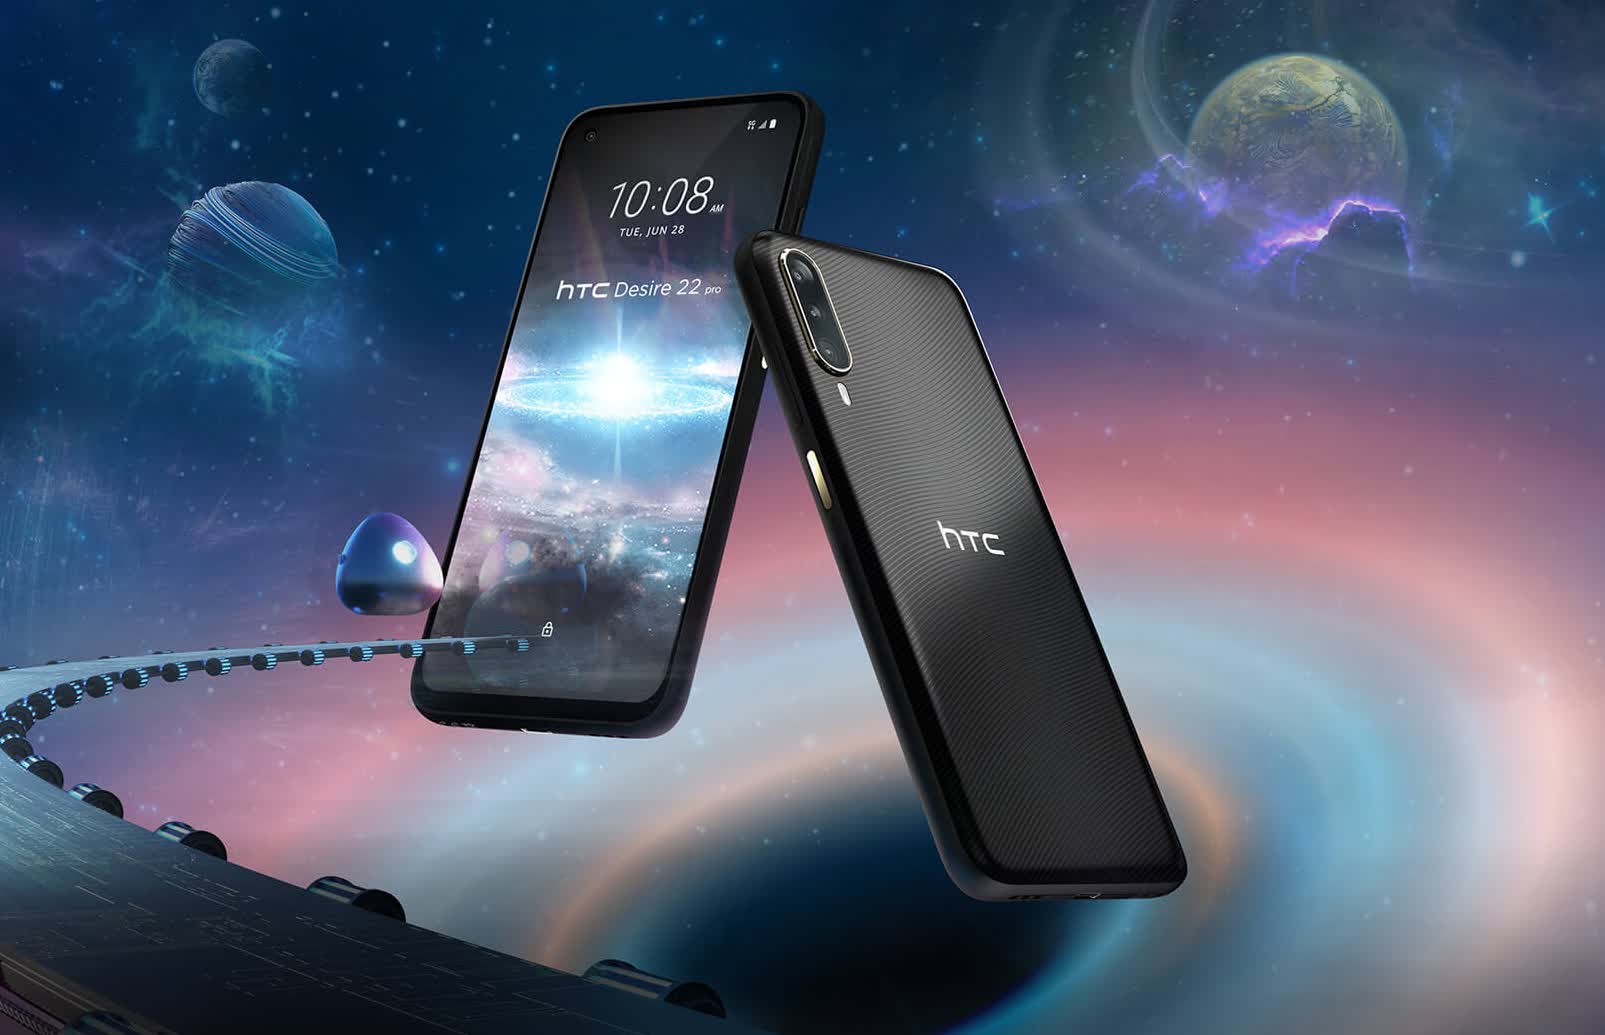 HTC introduces the metaverse-focused Desire 22 Pro smartphone